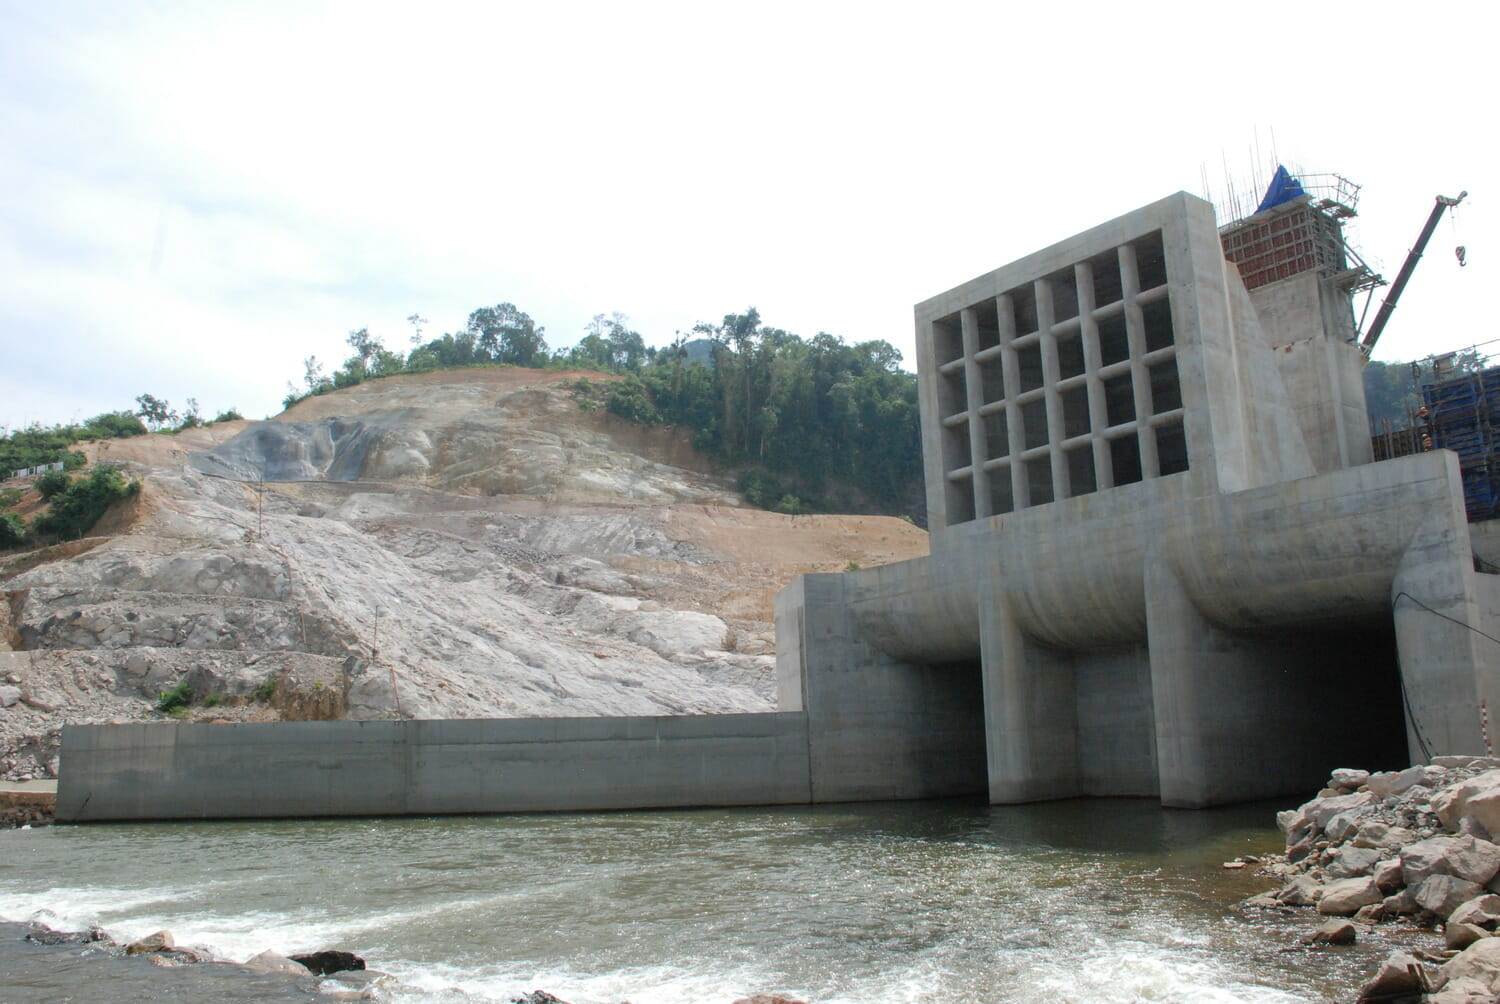 A concrete dam on a river.